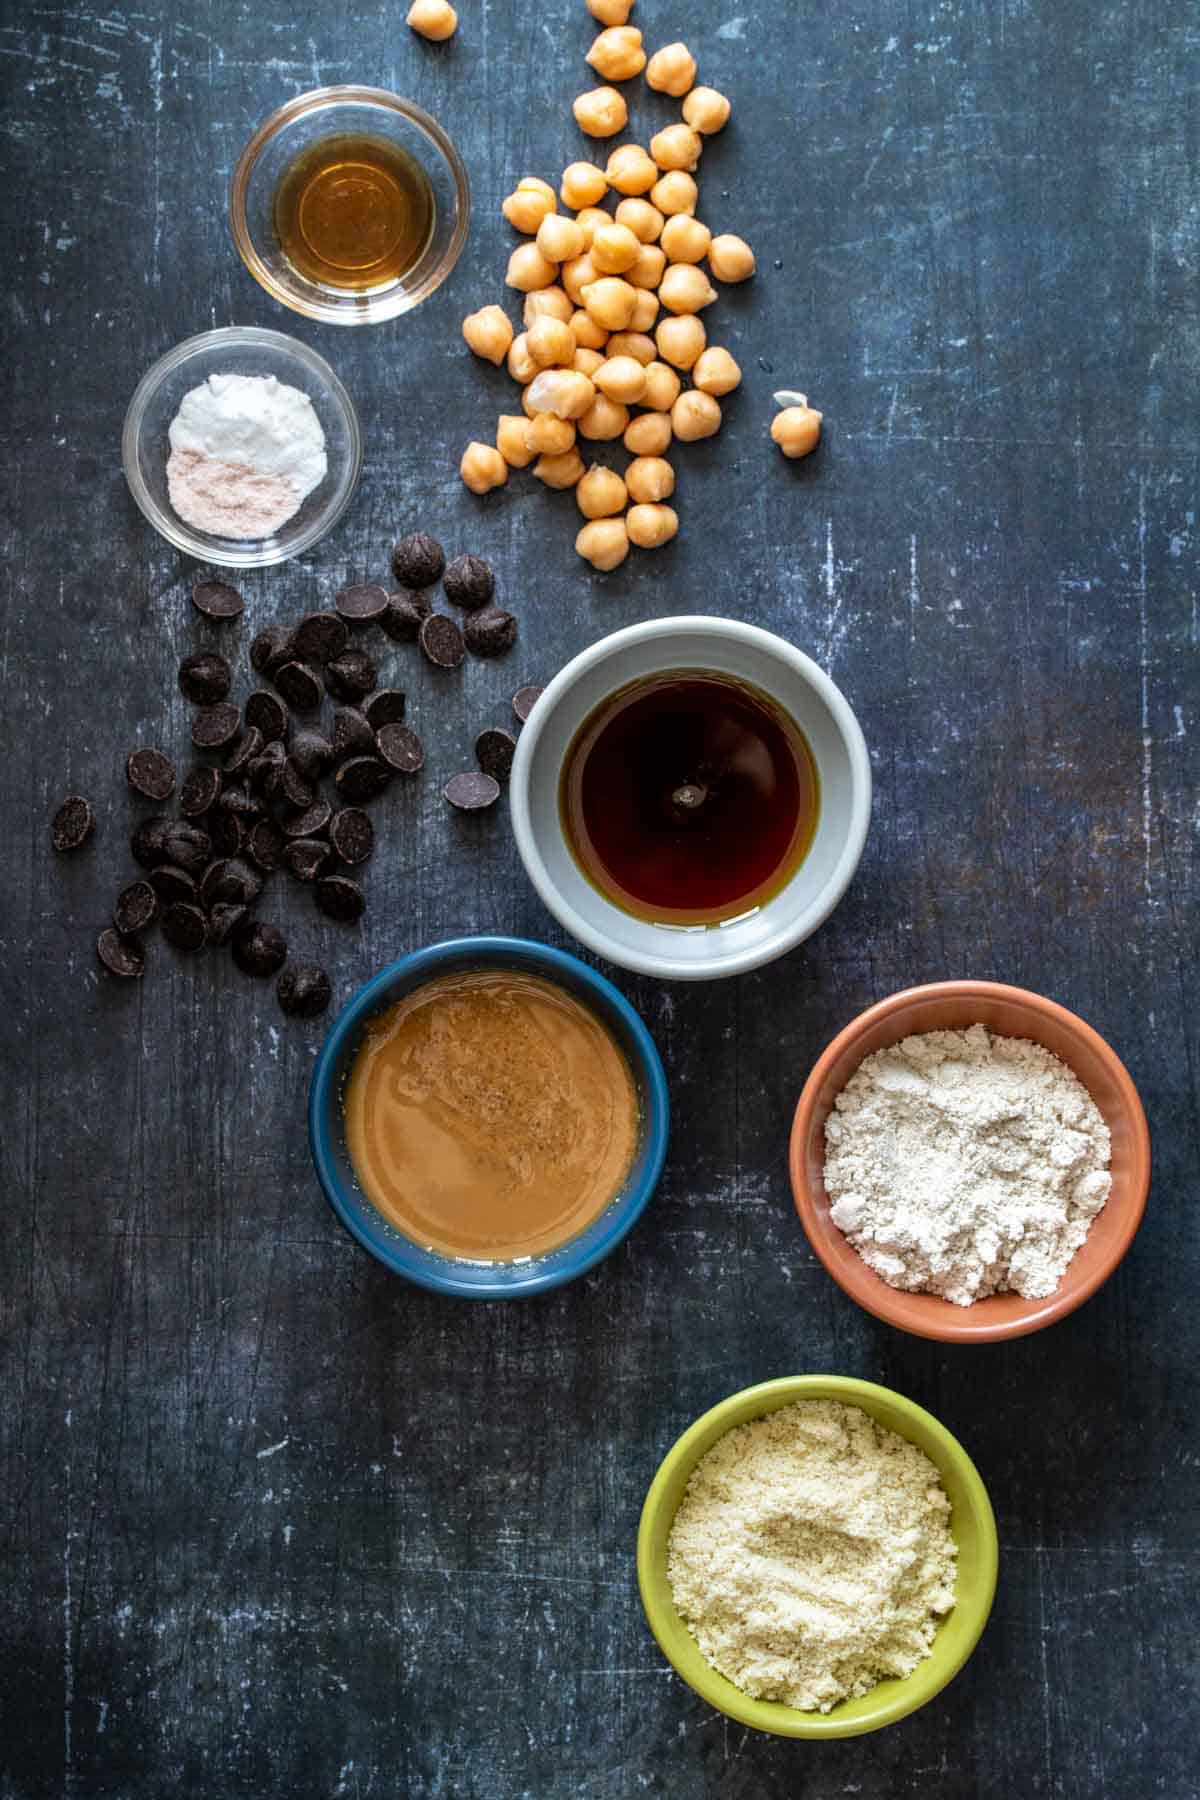 Top view of ingredients needed to make chickpea blondies vegan in bowls on a dark surface